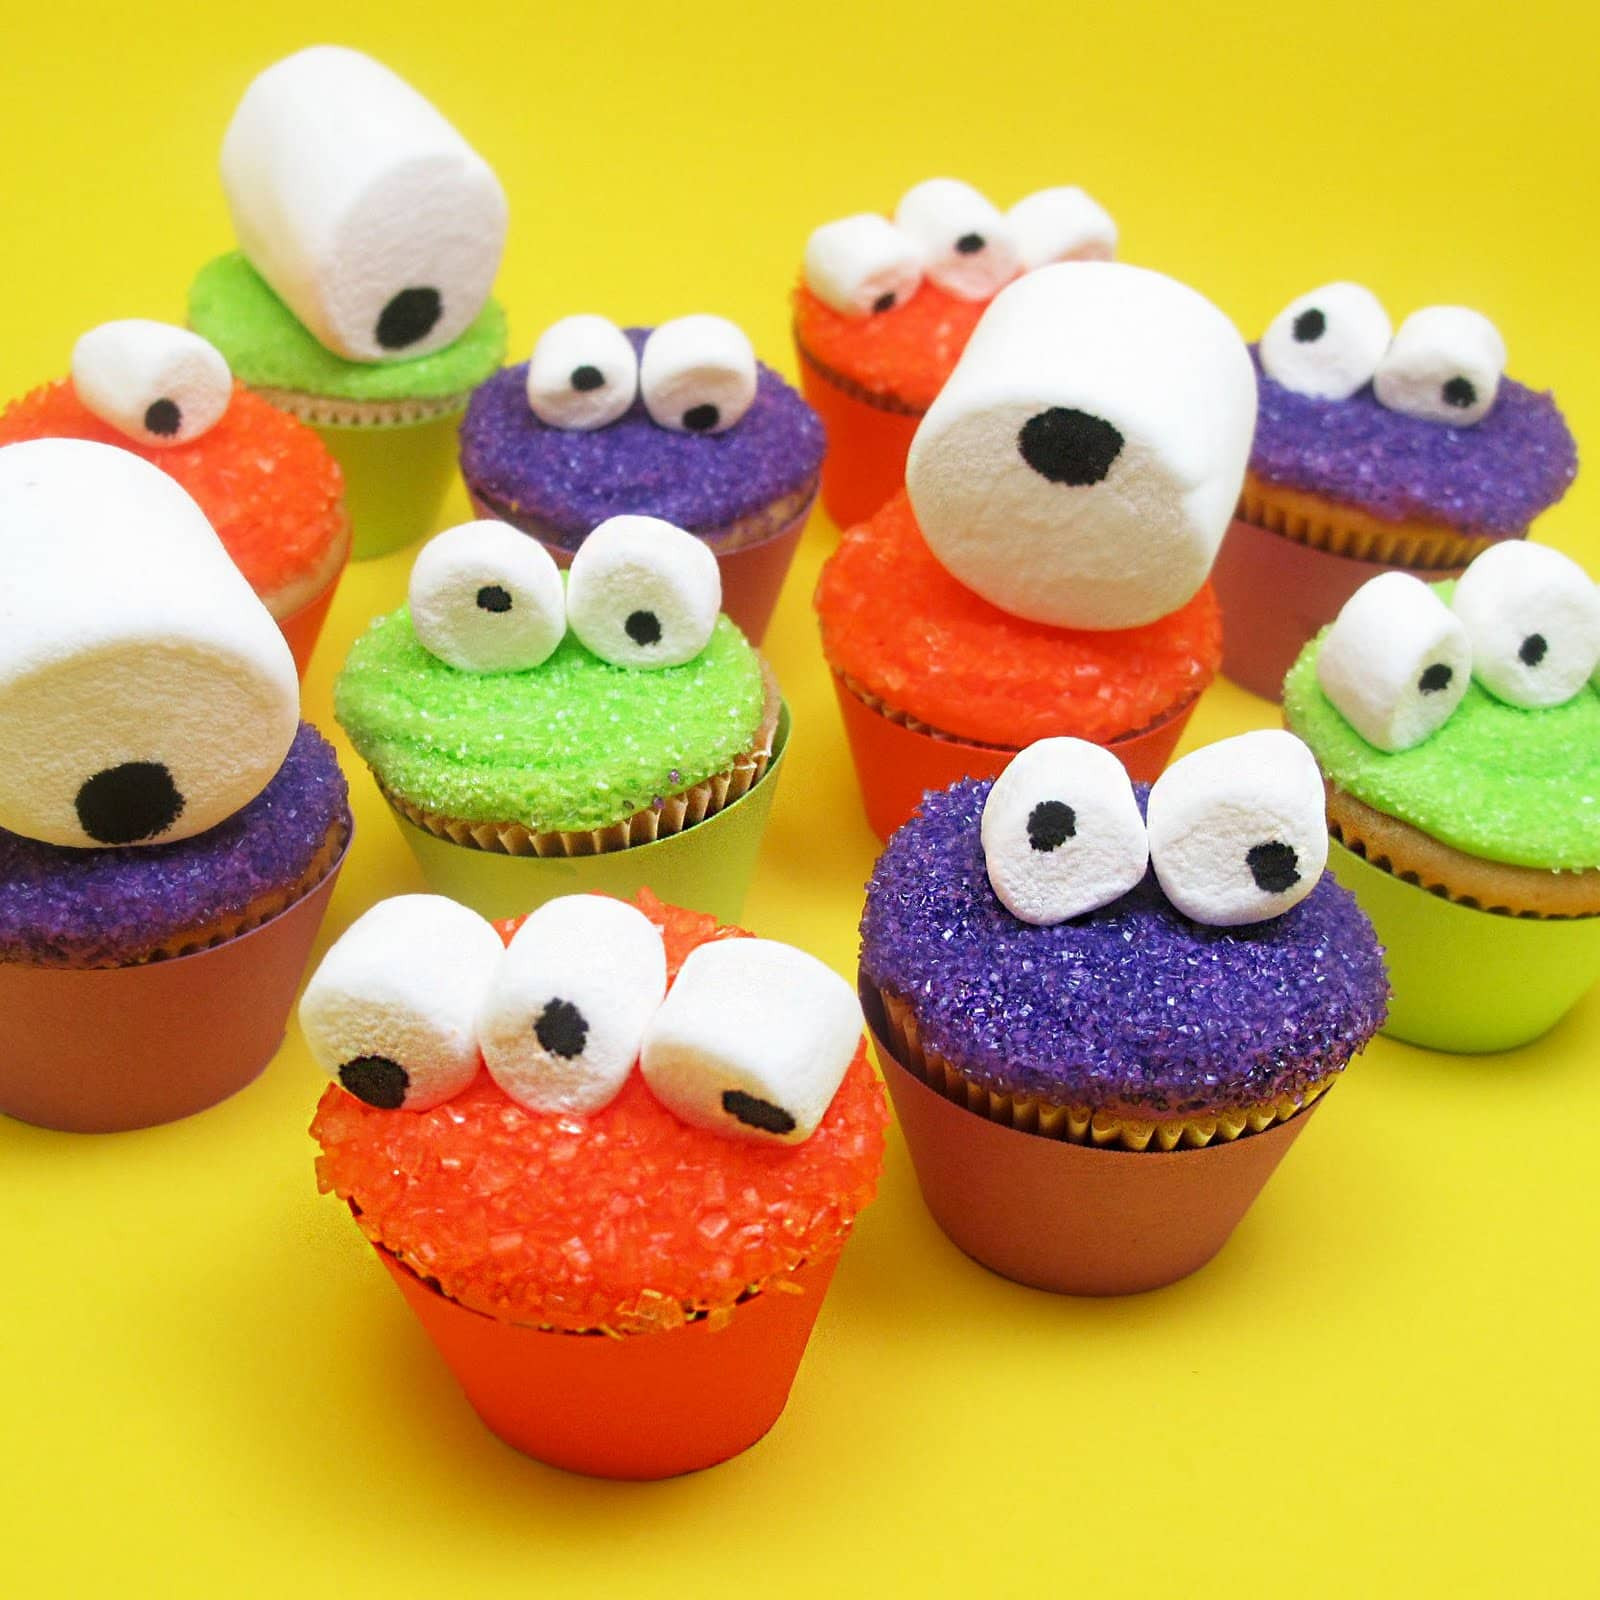 Halloween Monster Cupcakes
 mini monster cupcakes for an easy Halloween treat idea